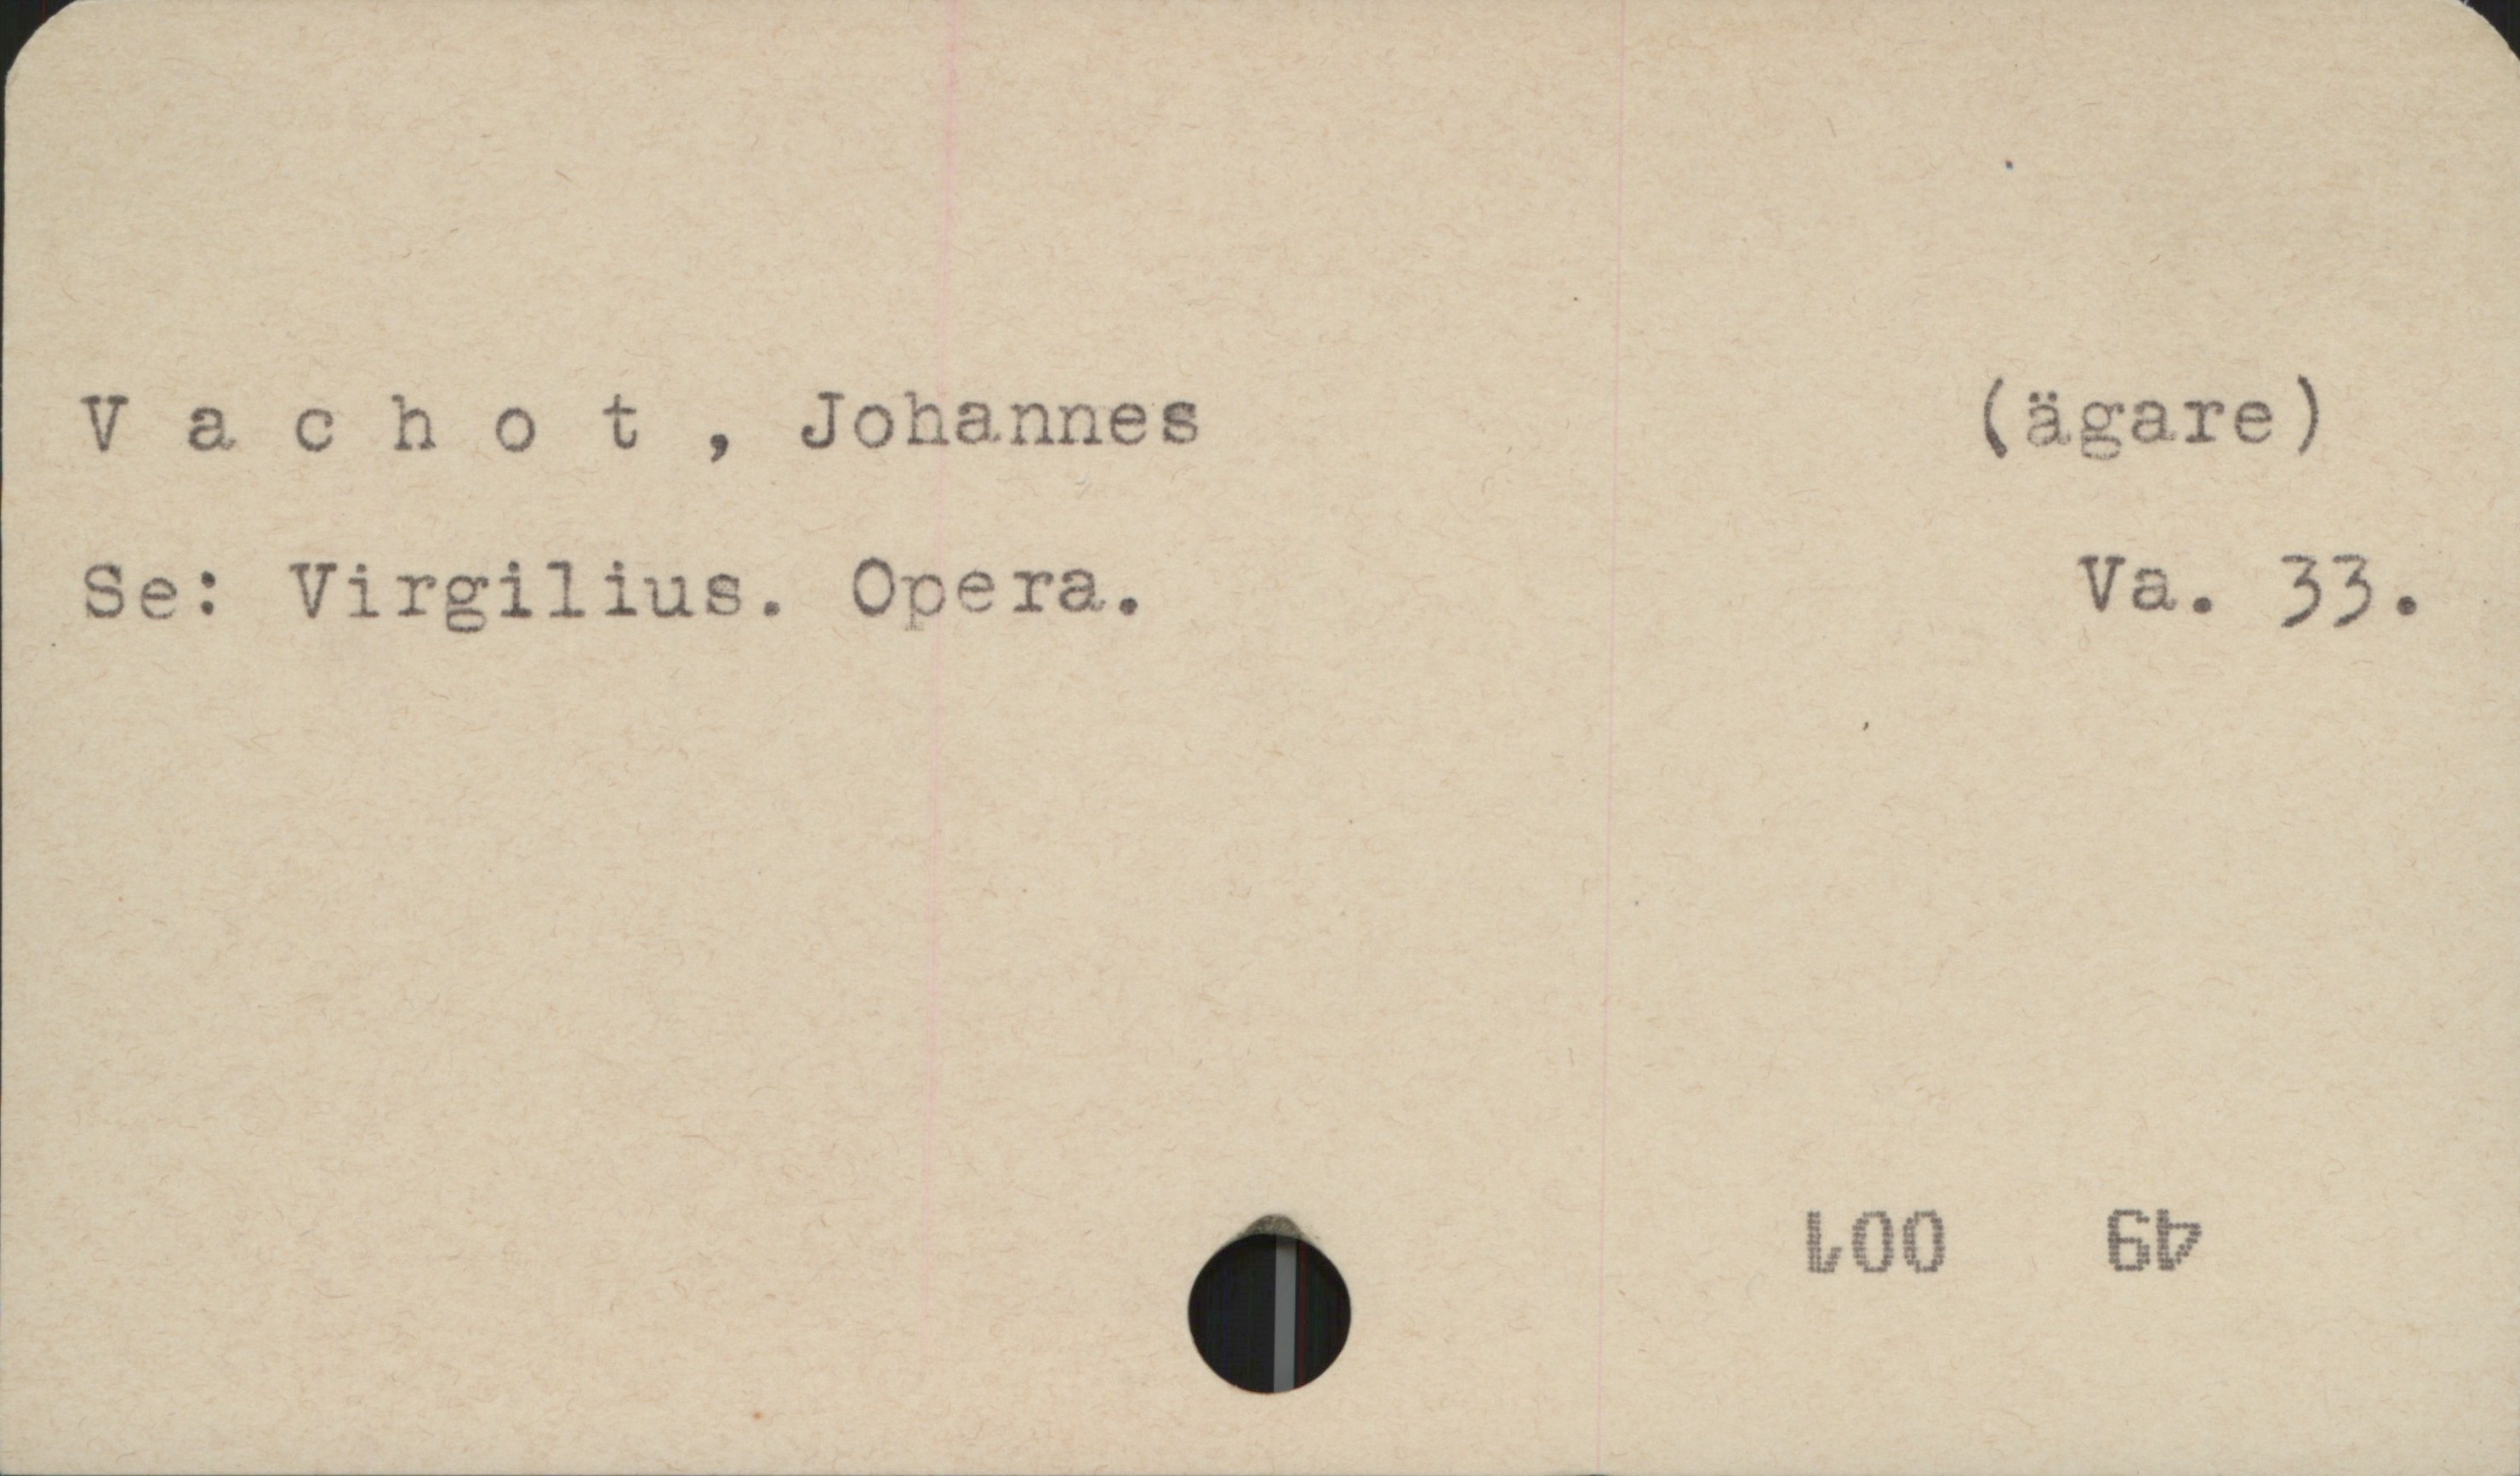 Vachot, Johannes Vachot, Johannes (ägare)
Se: Virgilius. Opera. Va. 33.